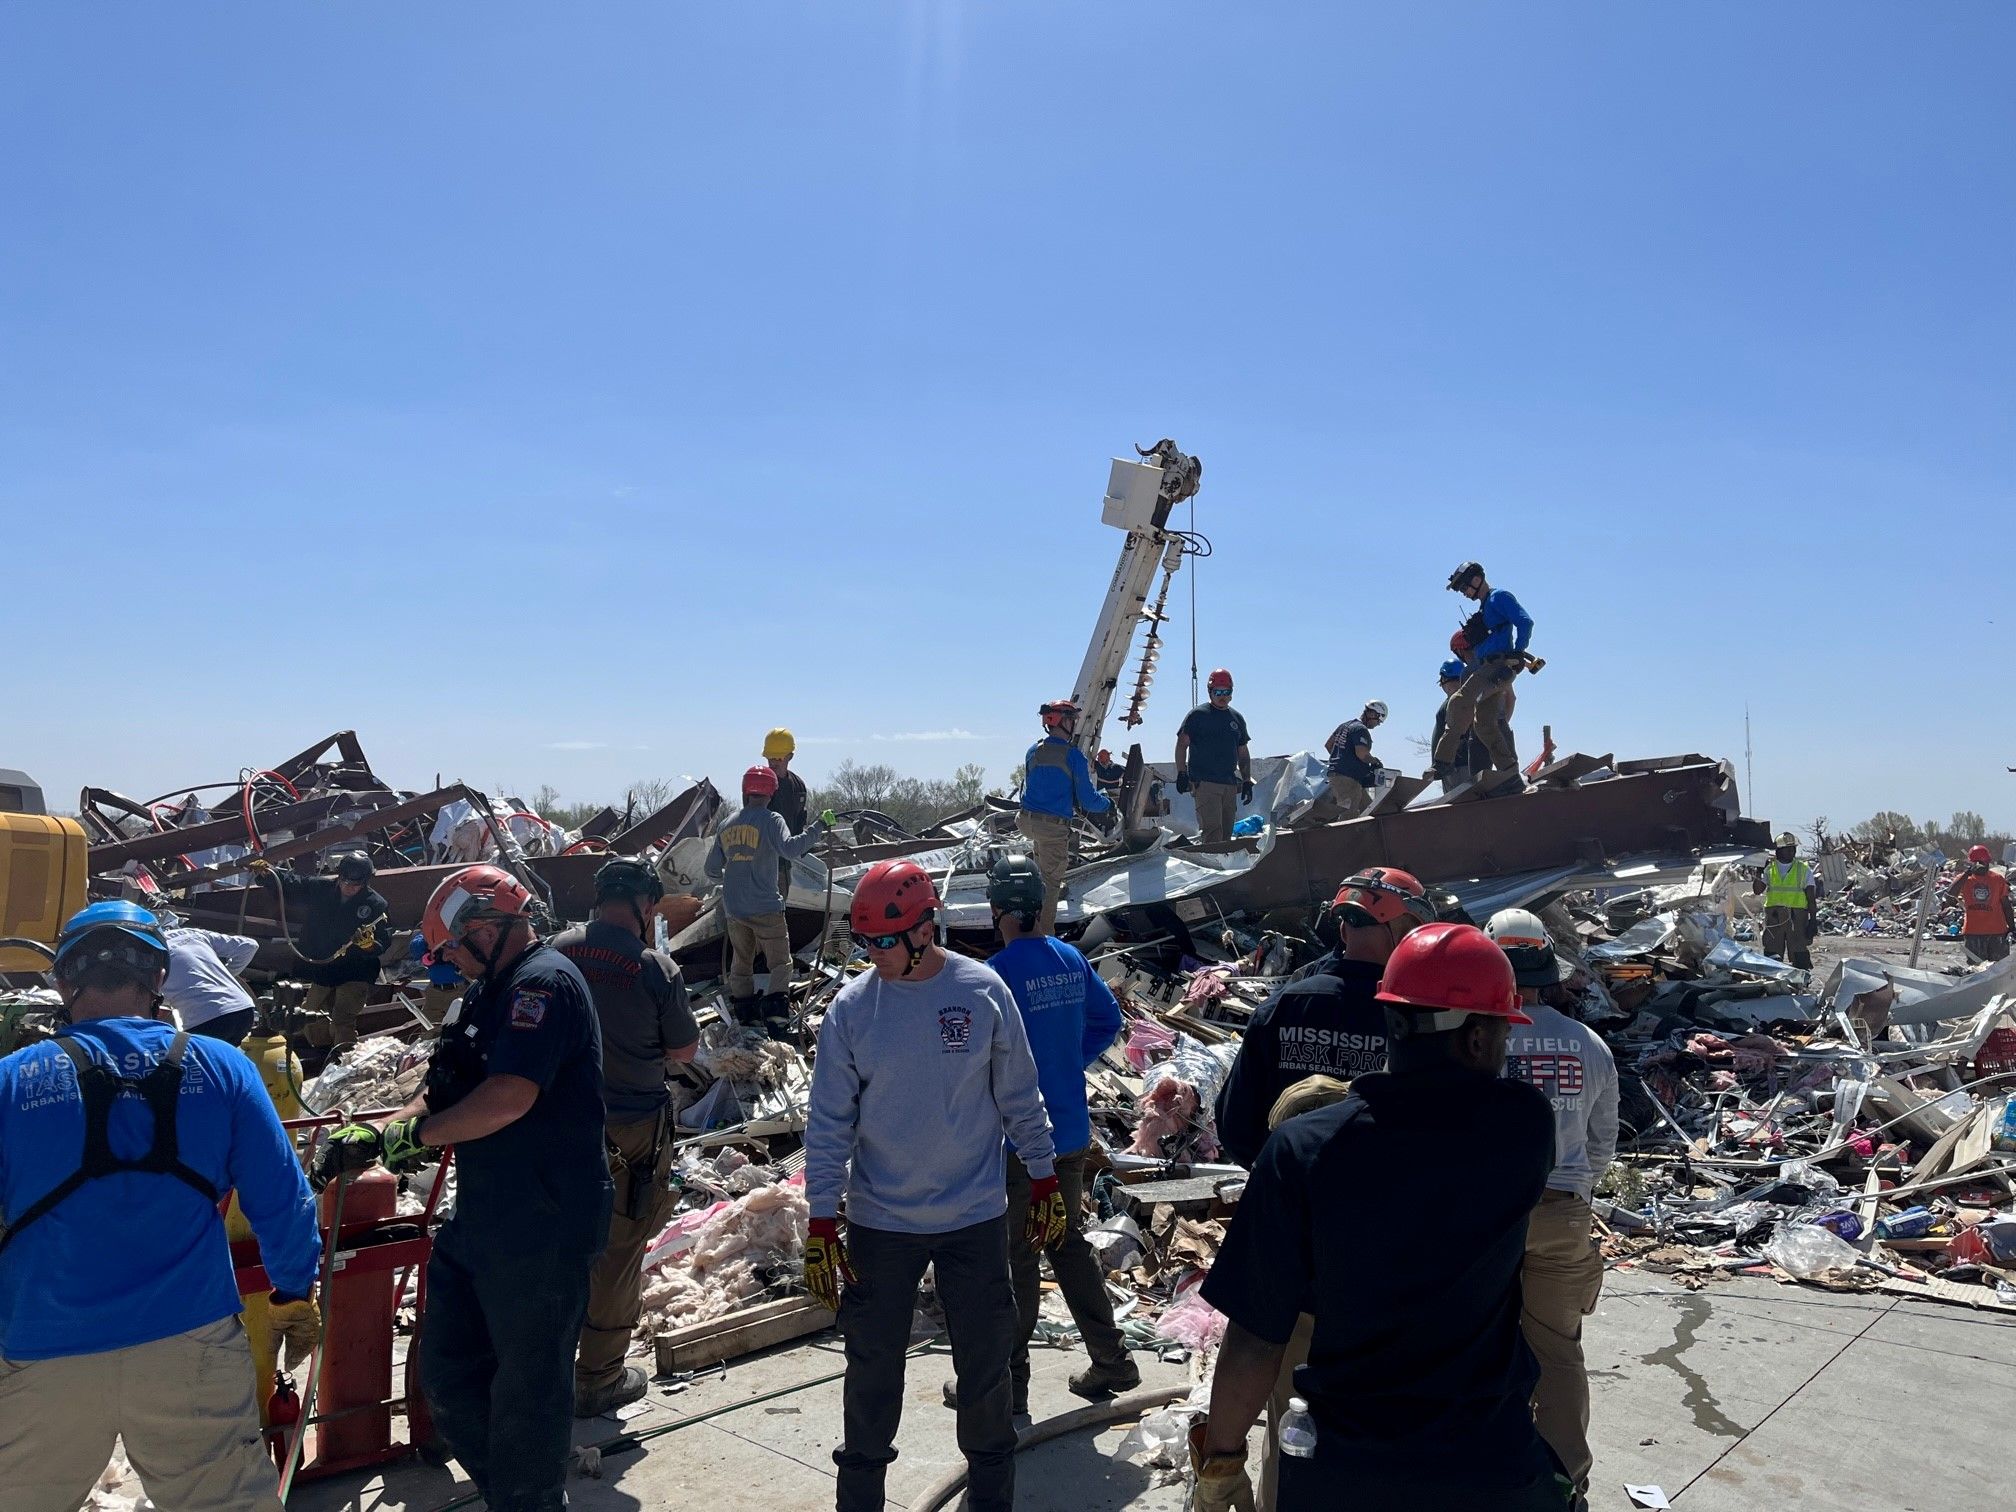 Mattress Mack starts GoFundMe to support relief efforts after Mississippi  tornado